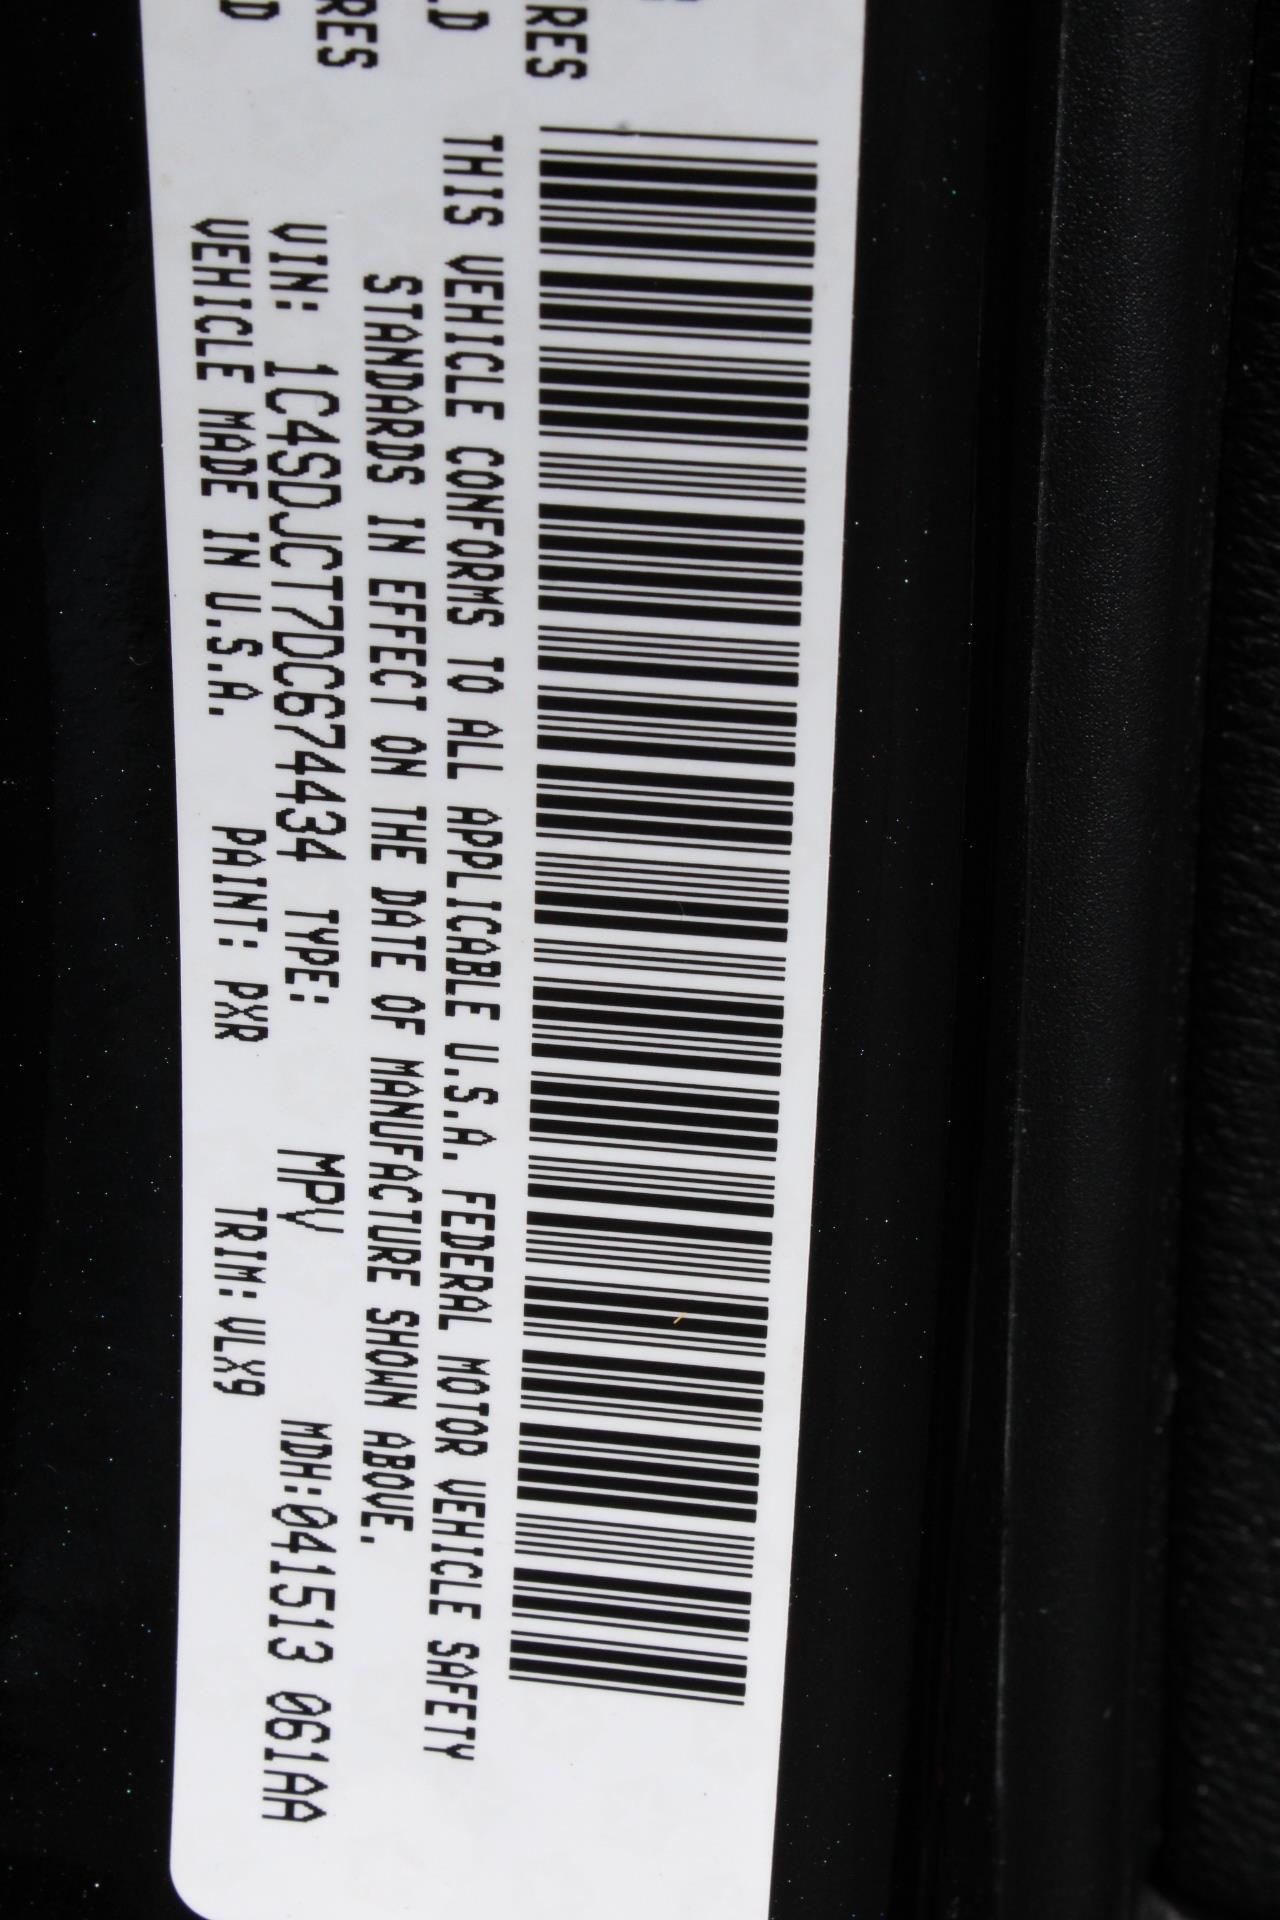 2013 DODGE DURANGO R/T, 5.7L V8, AWD, SEVEN PASSENGER SEATING, DVD PLAYER, LEATHER INTERIOR, VIN - Image 11 of 11